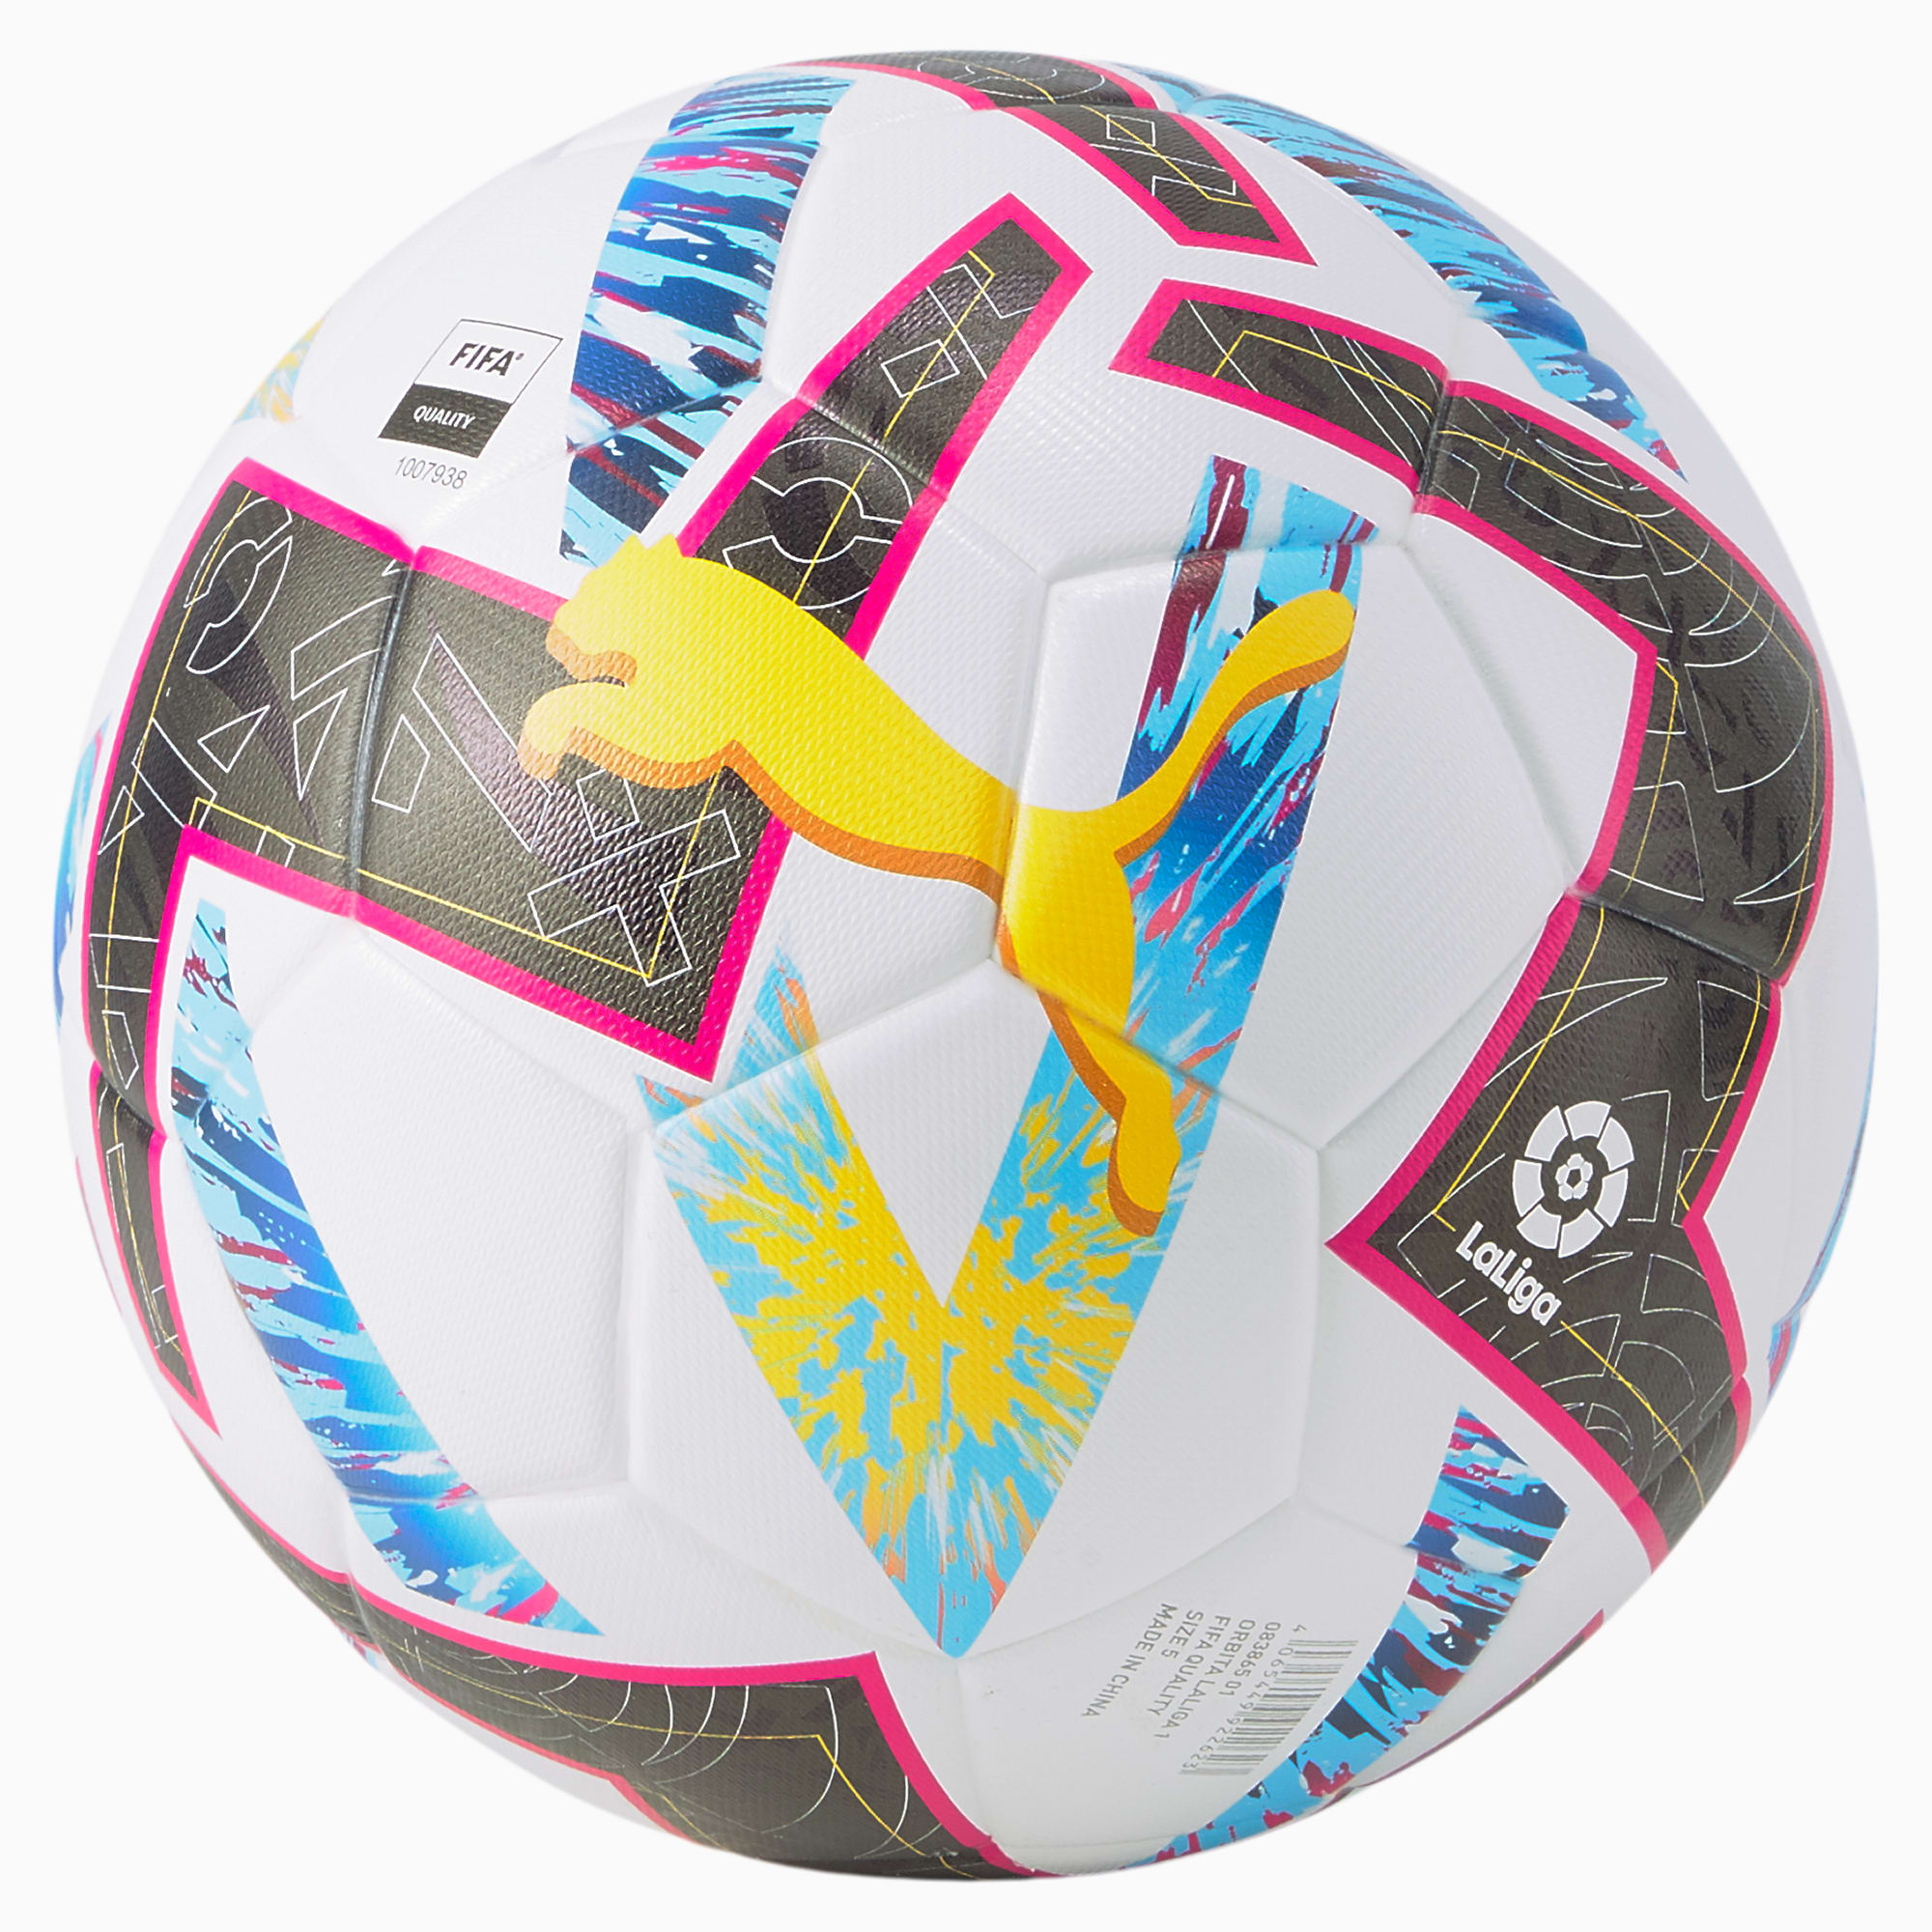 Orbita La Liga 1 FIFA Quality Soccer Ball | PUMA